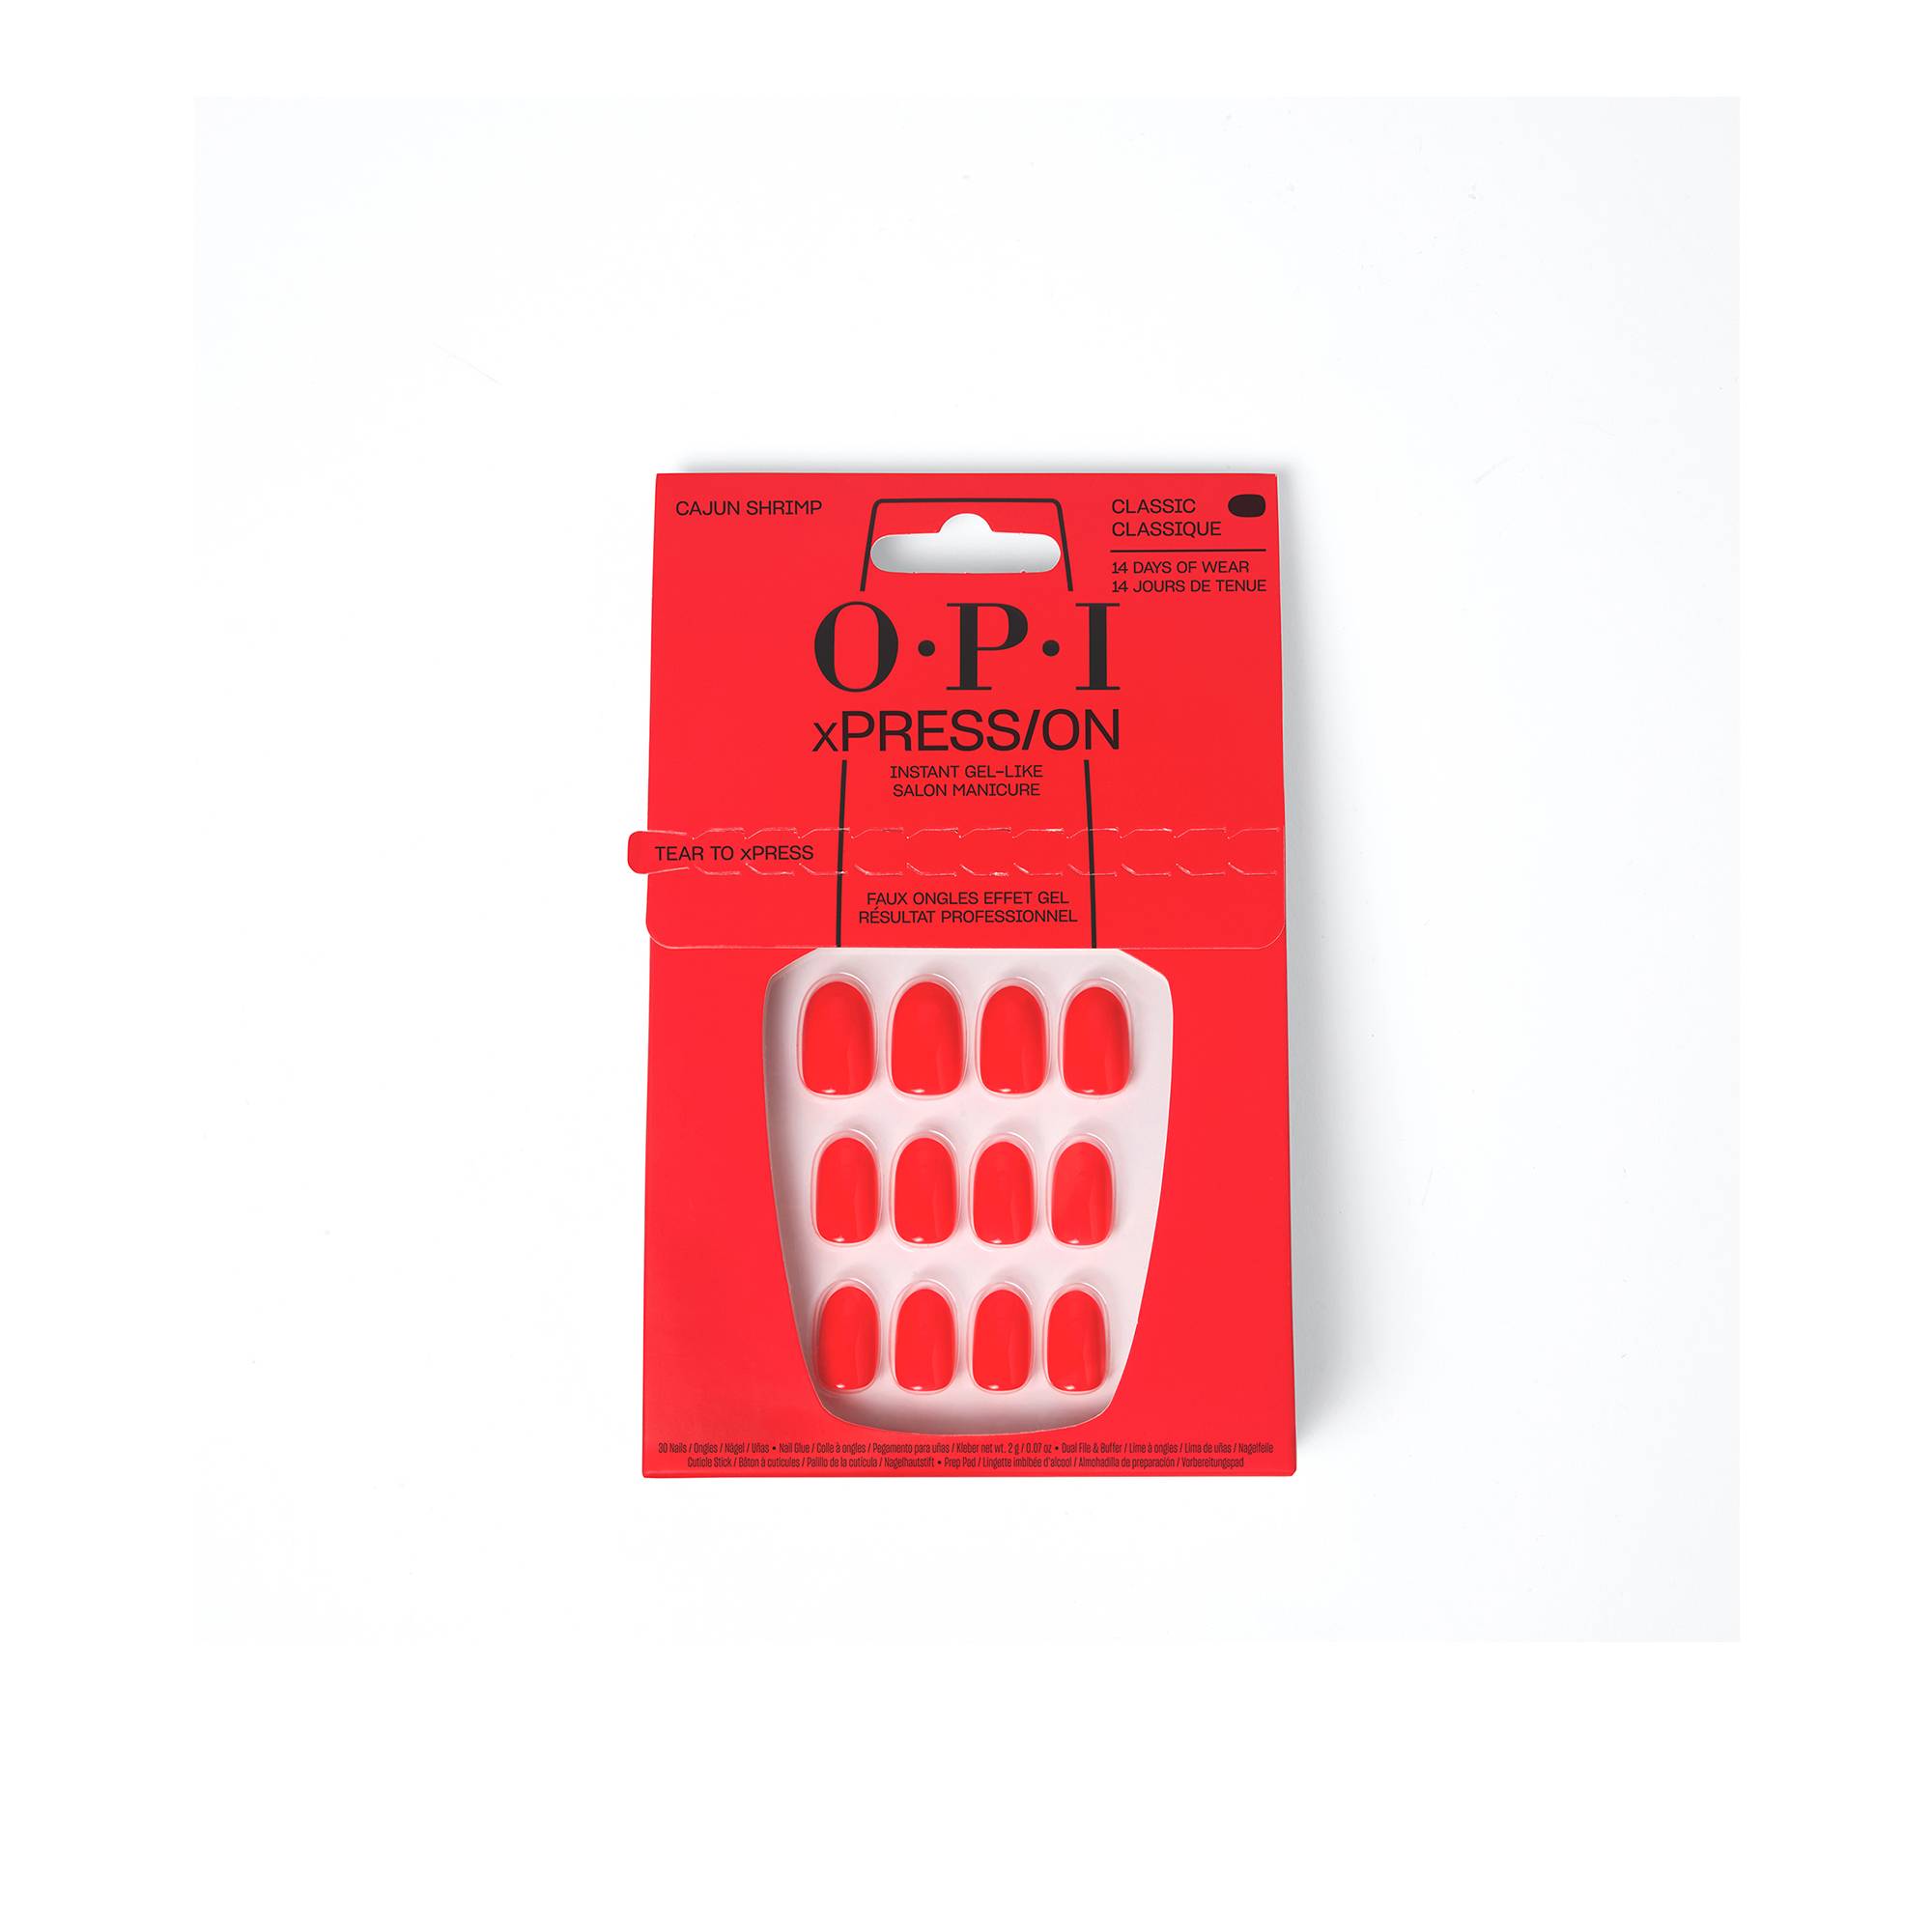 Faux-ongles xPRESS/ON - Cajun Shrimp™ de la marque OPI Contenance 2g - 1